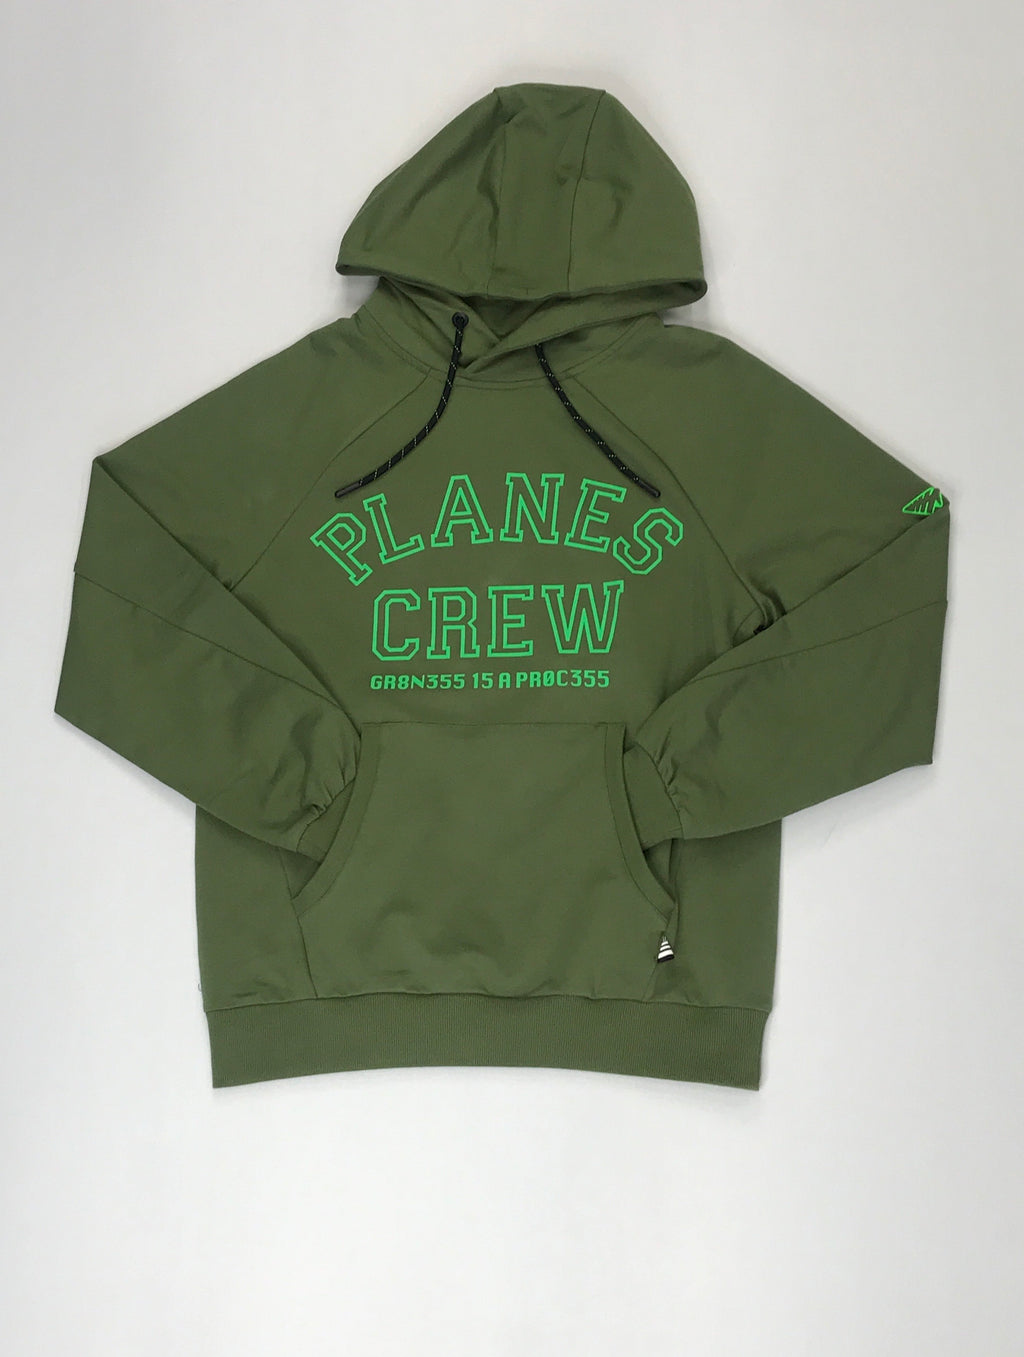 Planes Crew hoodie in green